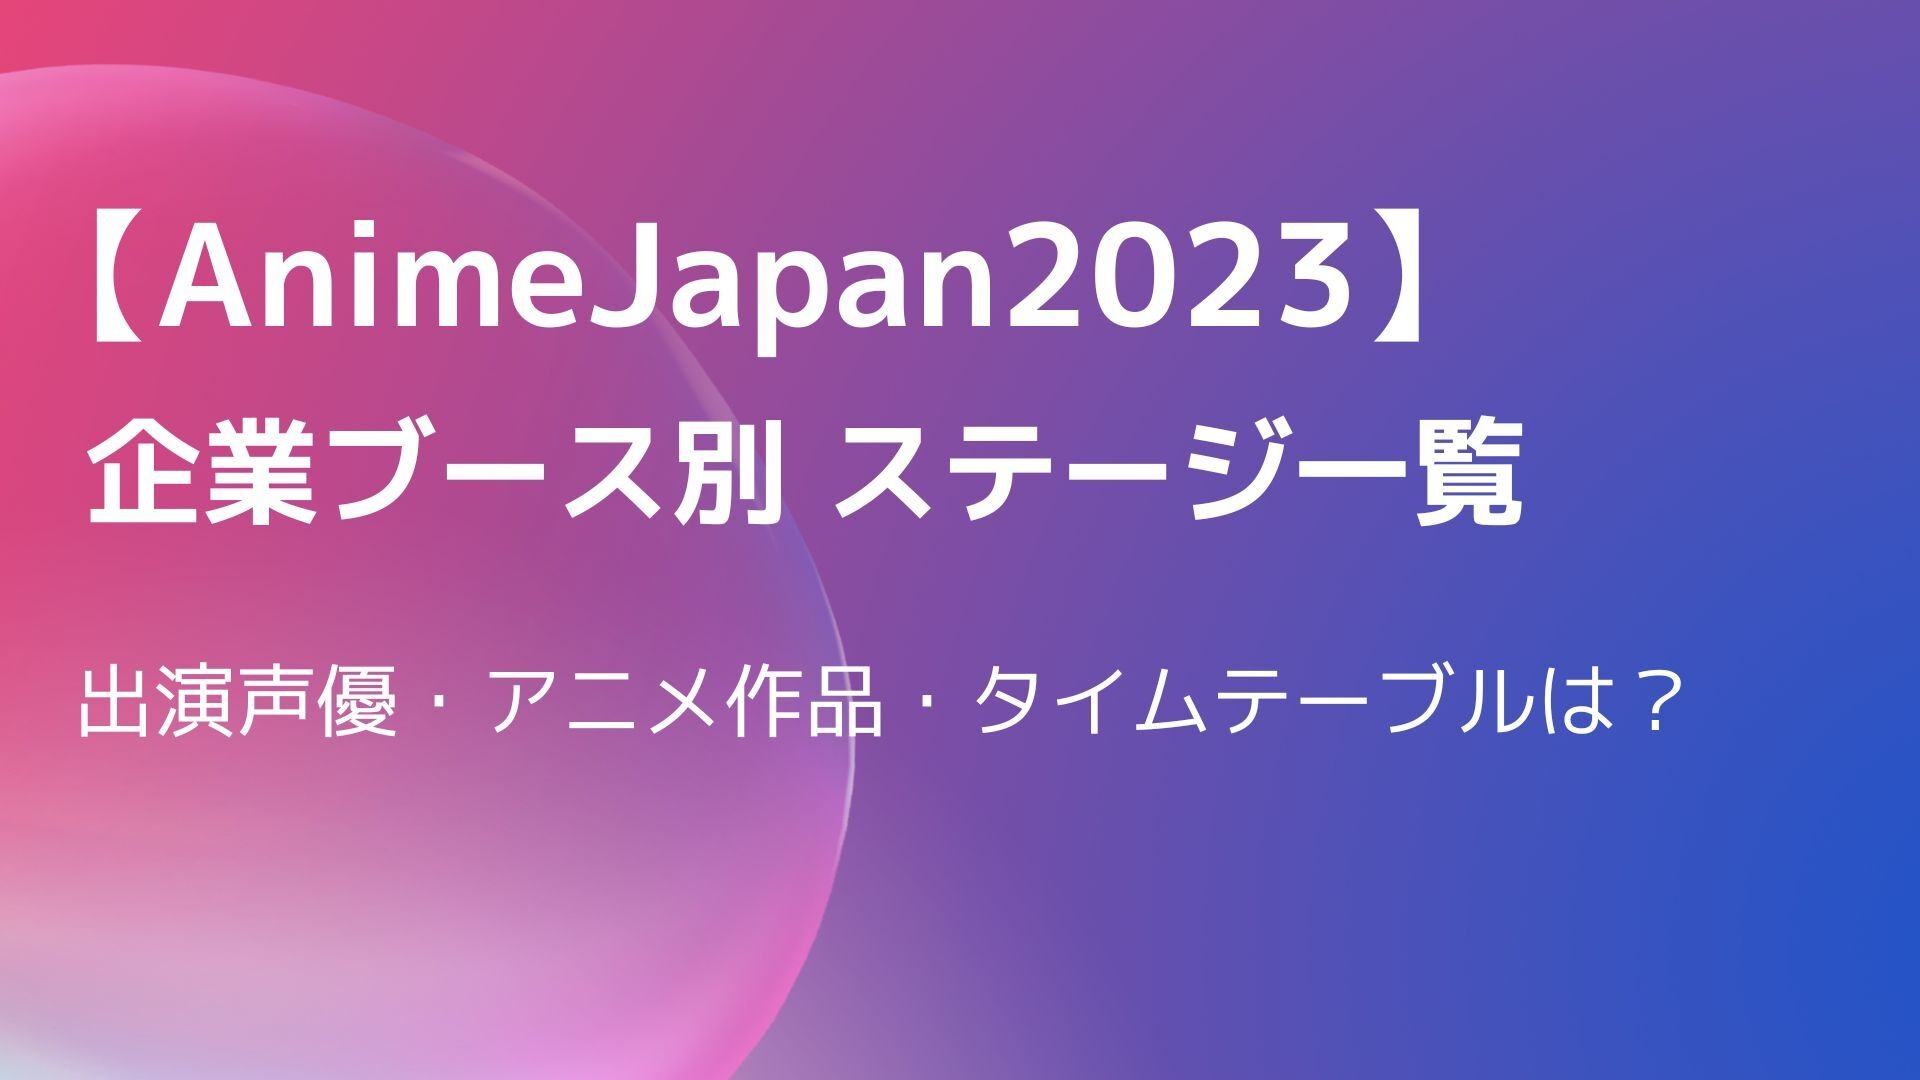 AnimeJapan2023】企業ブース別ステージまとめ 出演声優・アニメ作品